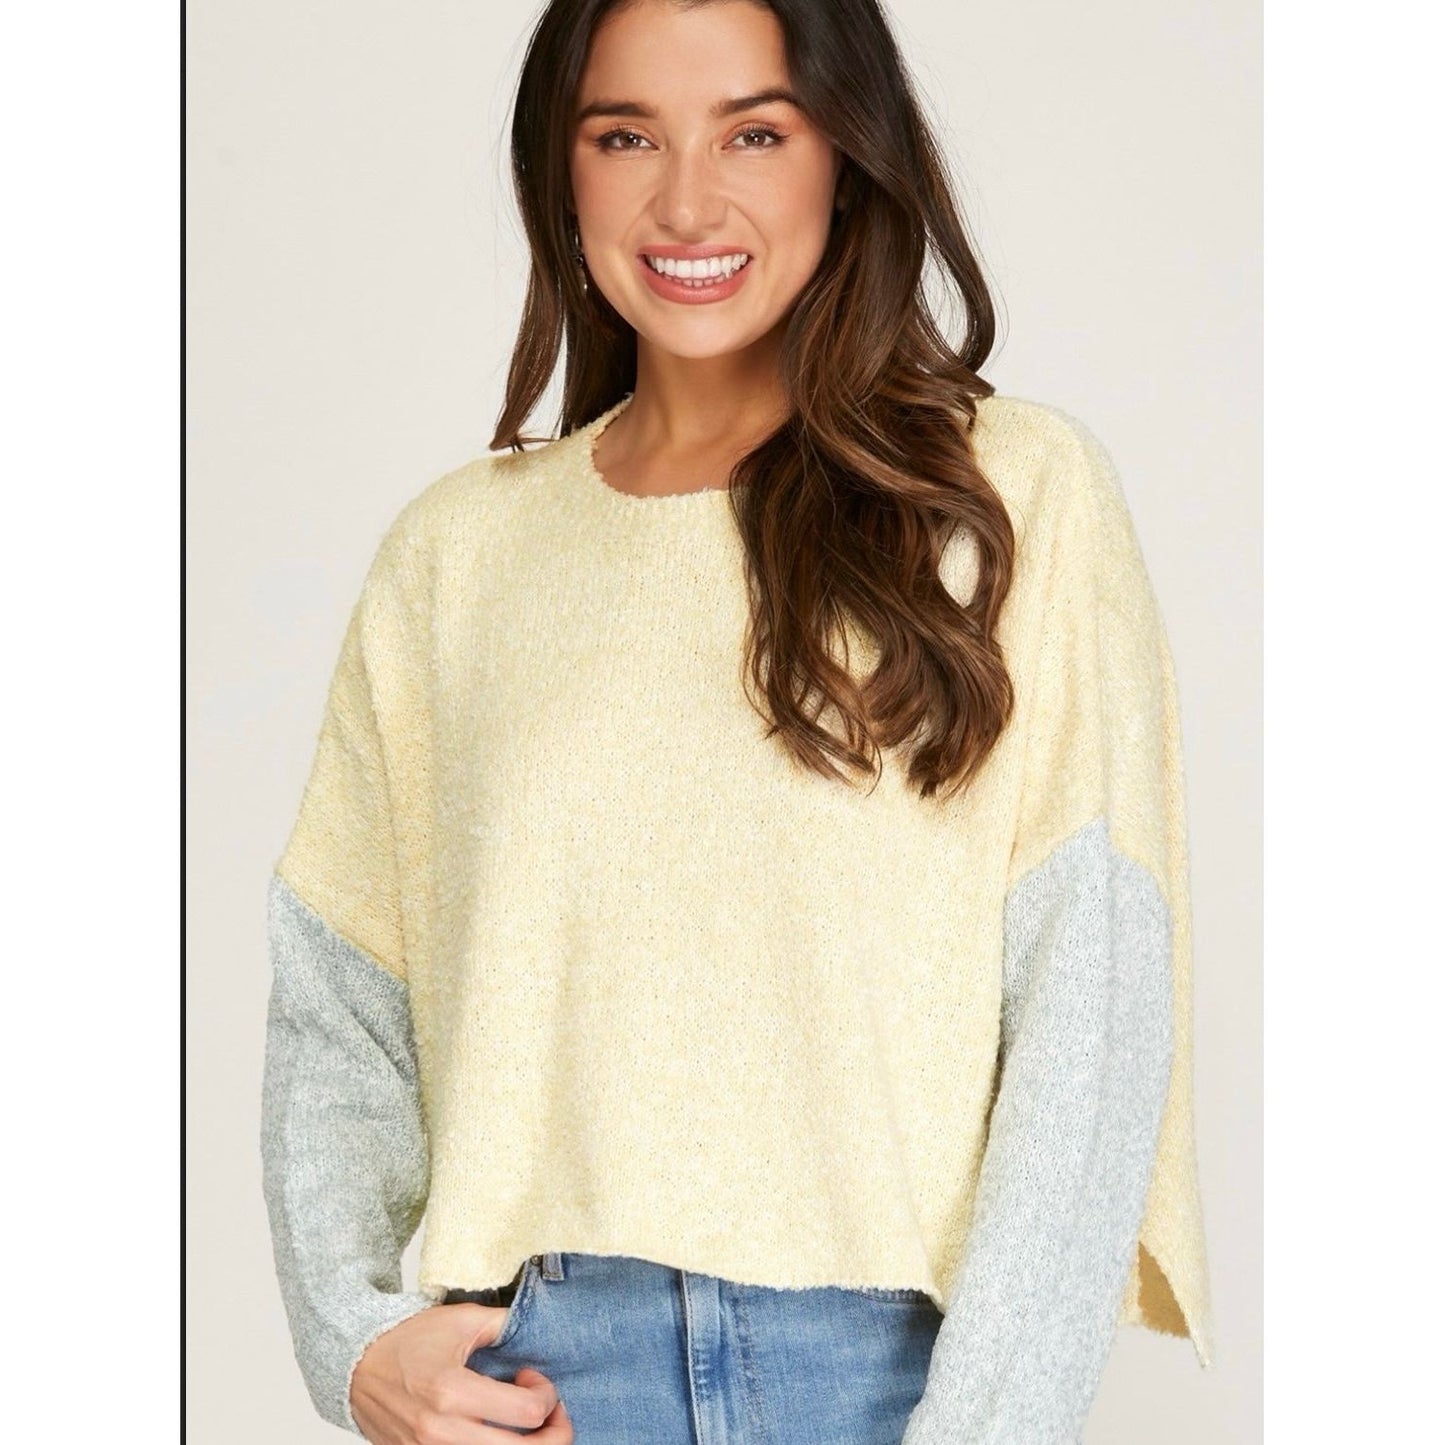 Little Miss Sunshine sweater